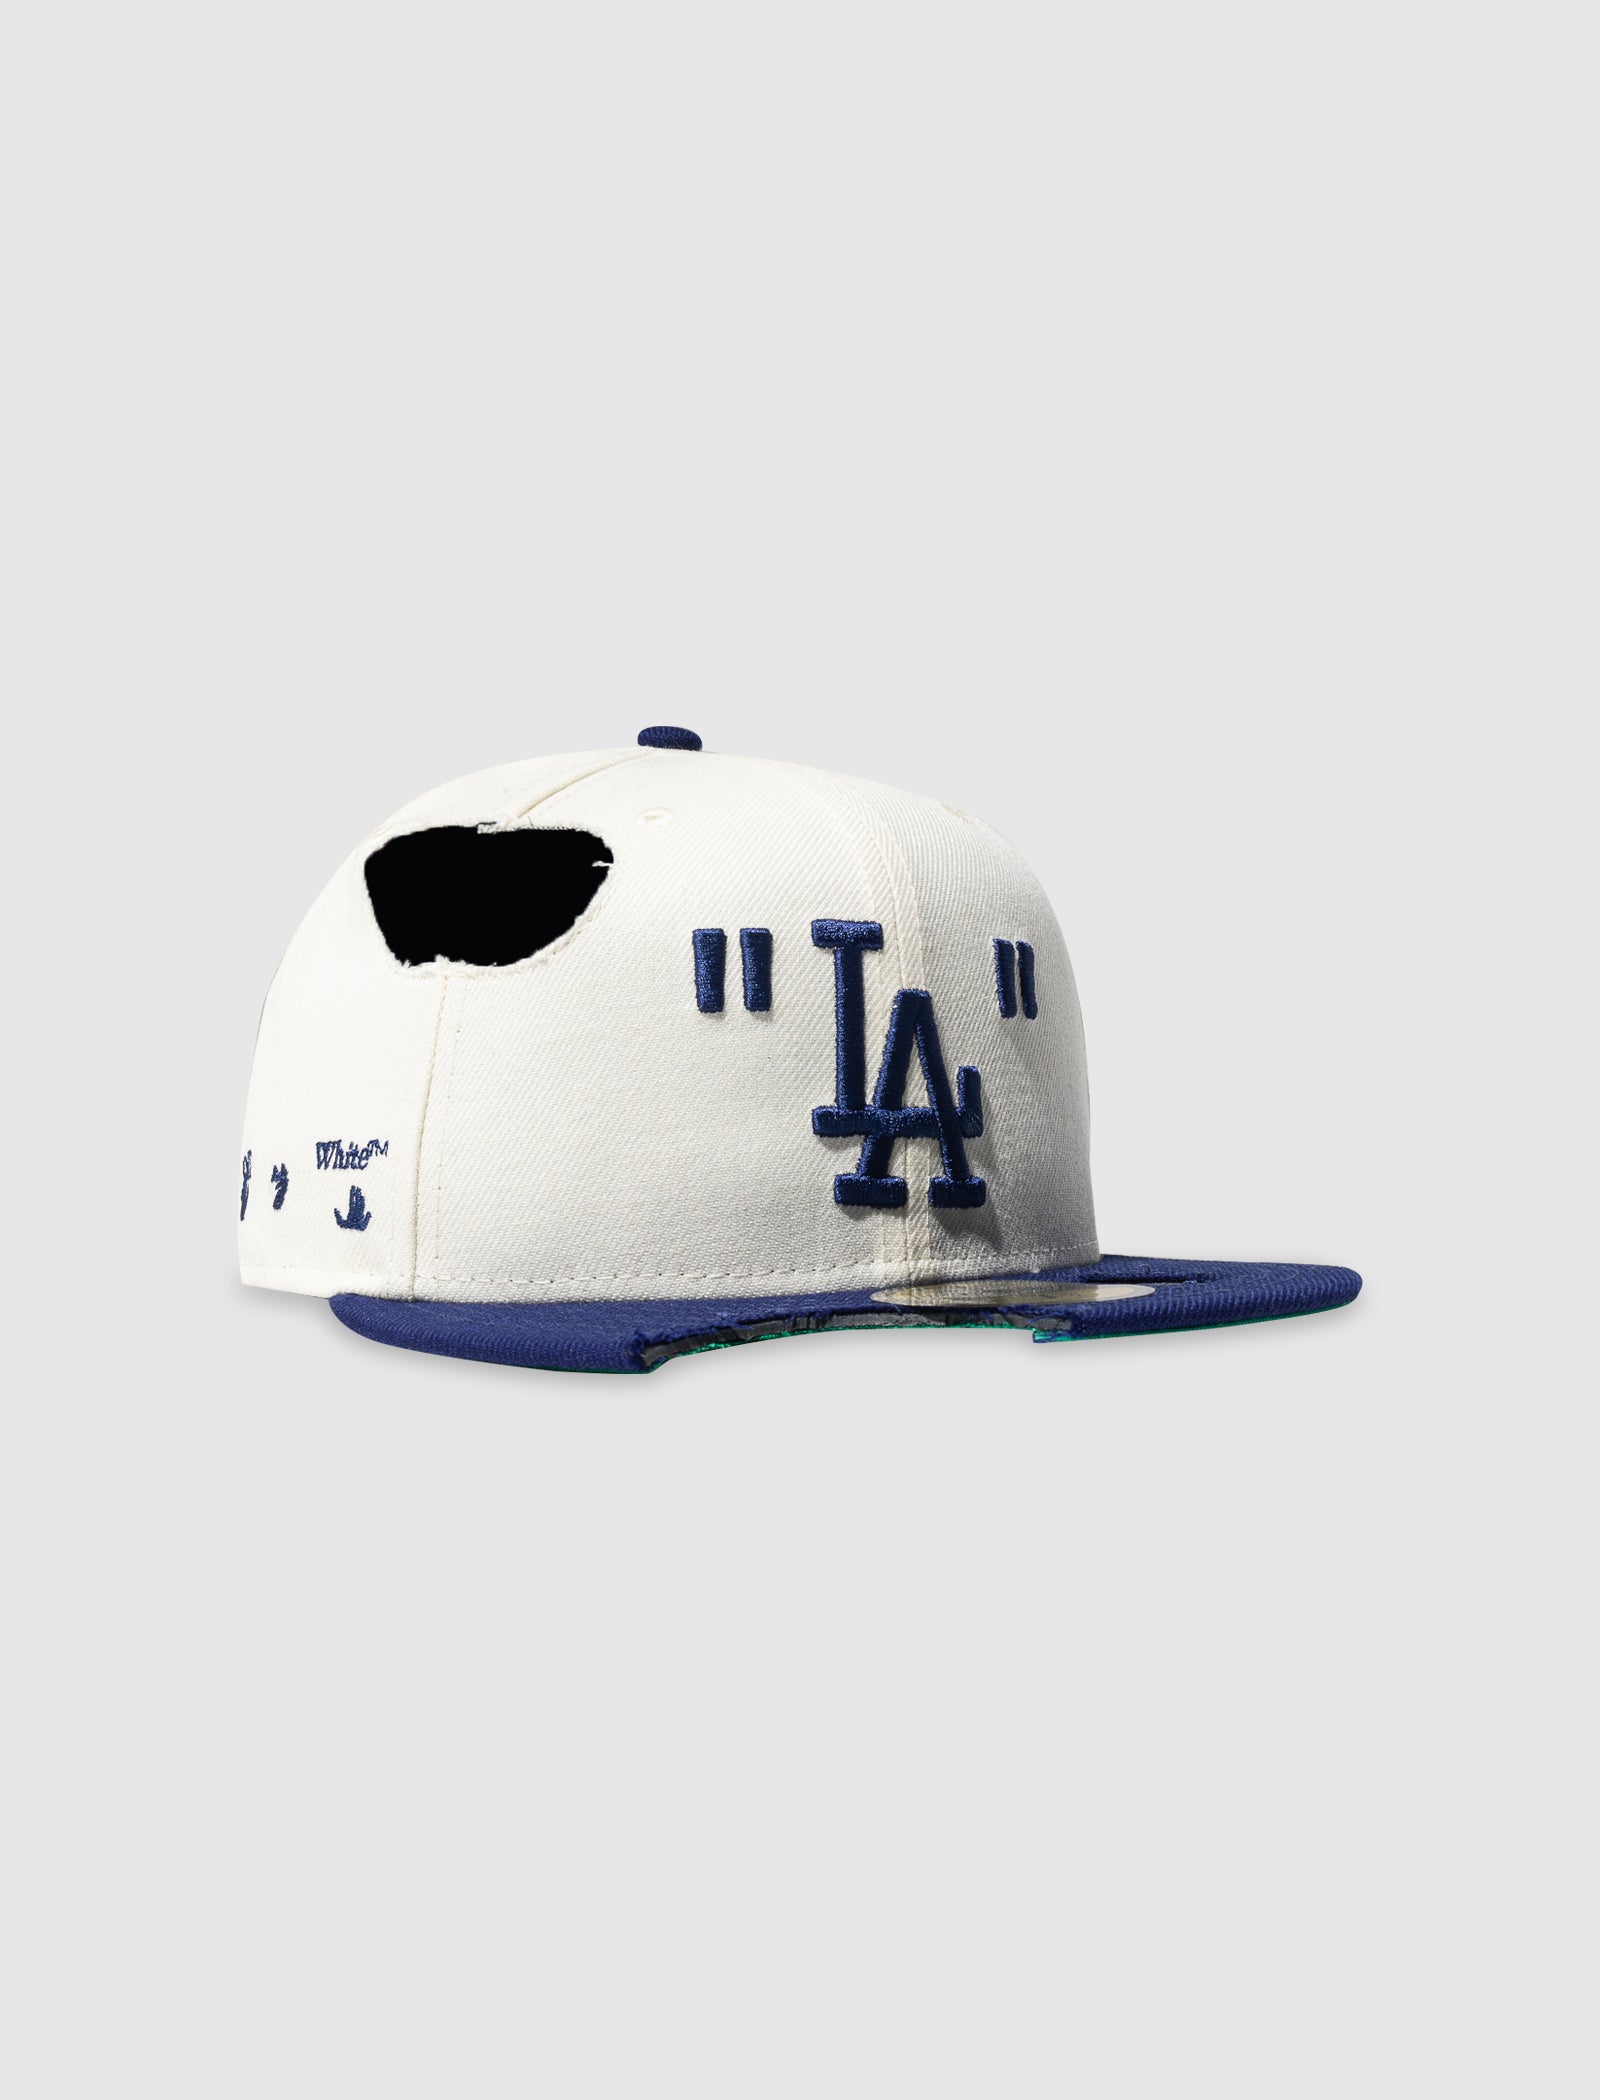 OFF-WHITE x MLB Los Angeles Dodgers T-Shirt Cream/Blue Men's - US